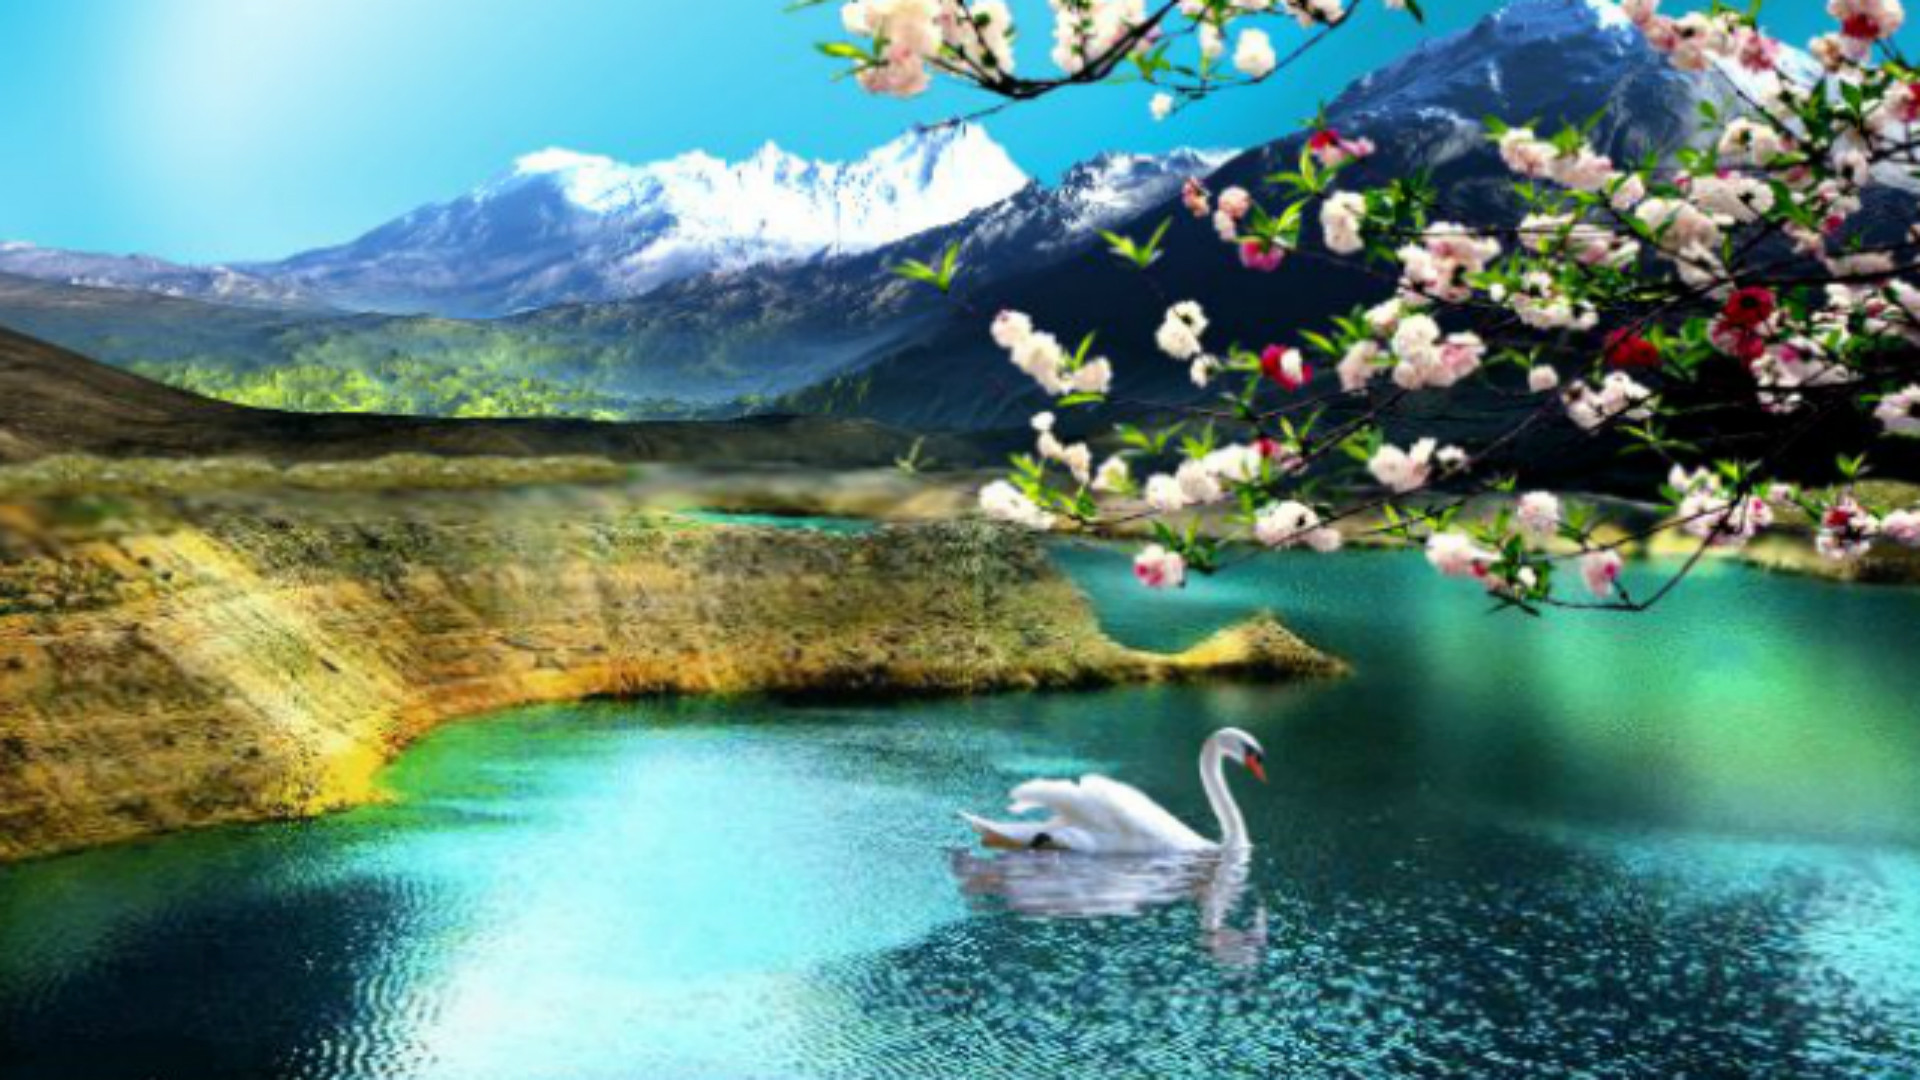 Hd Nature Wallpapers, Flowers, Cute Desktop Images, - Nature Wallpaper